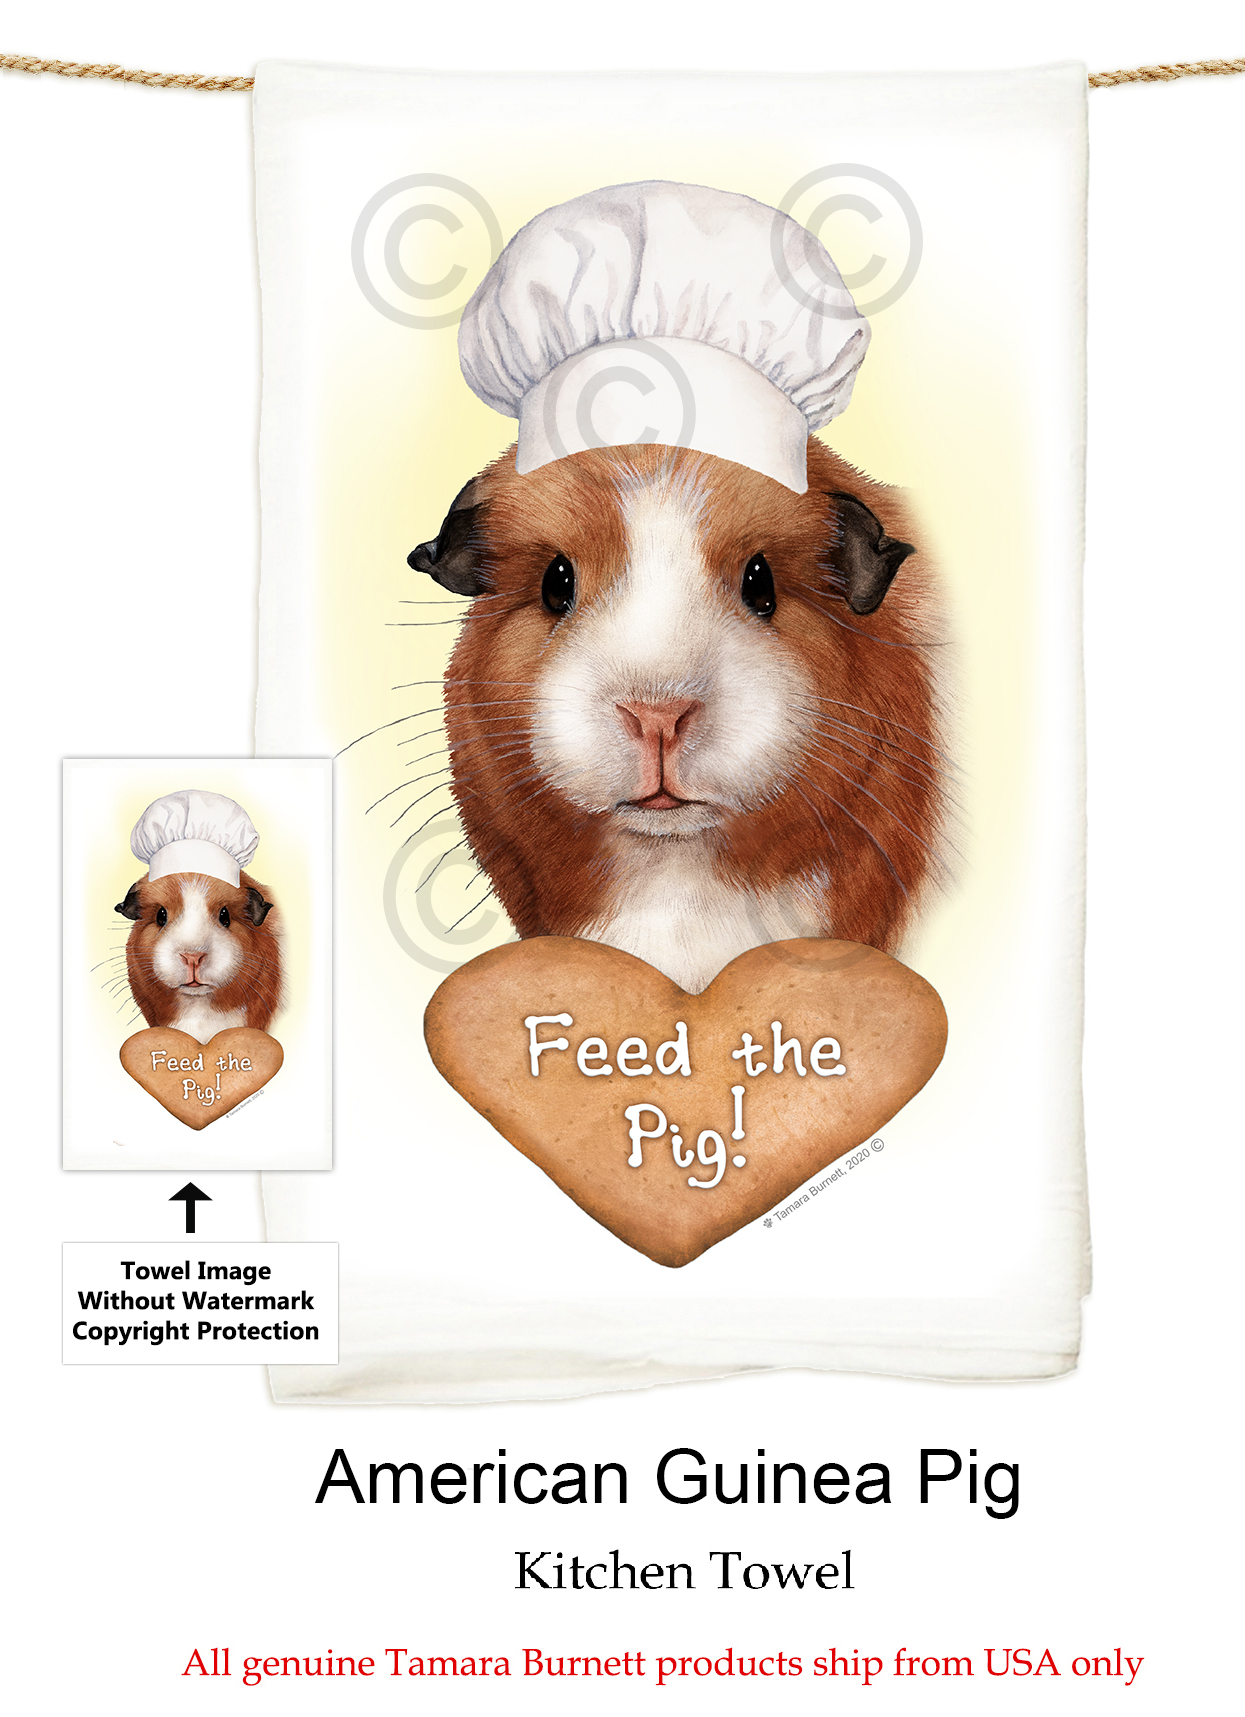 Guinea Pig (American) - Flour Sack Towel image sized 1245 x 1717